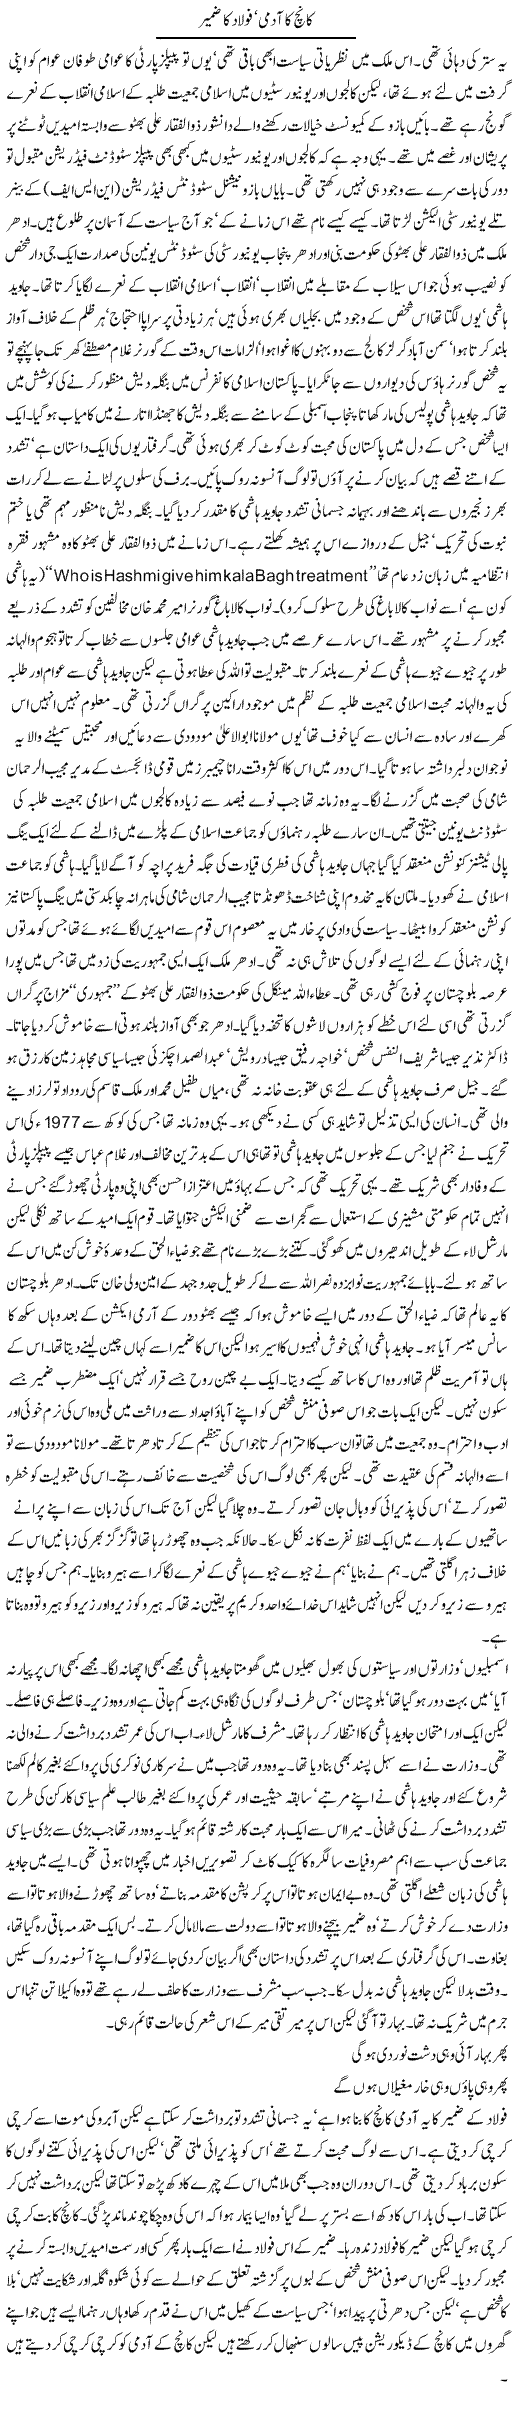 Javed Hashmi Express Column Orya Maqbool 28 December 2011